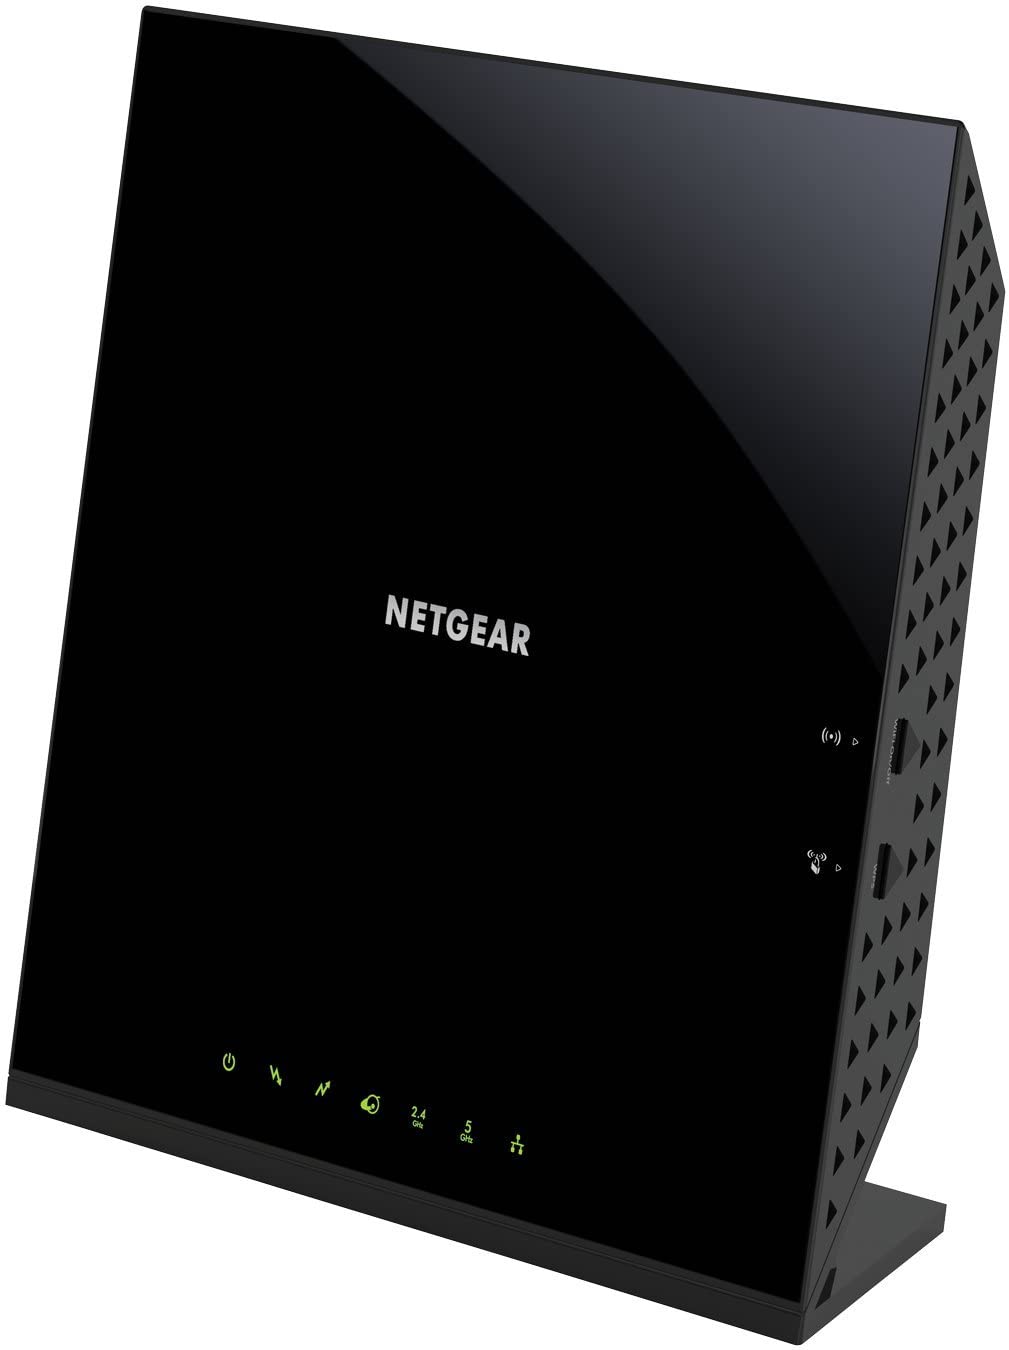 NETGEAR Cable Modem WiFi Router Combo -C6250